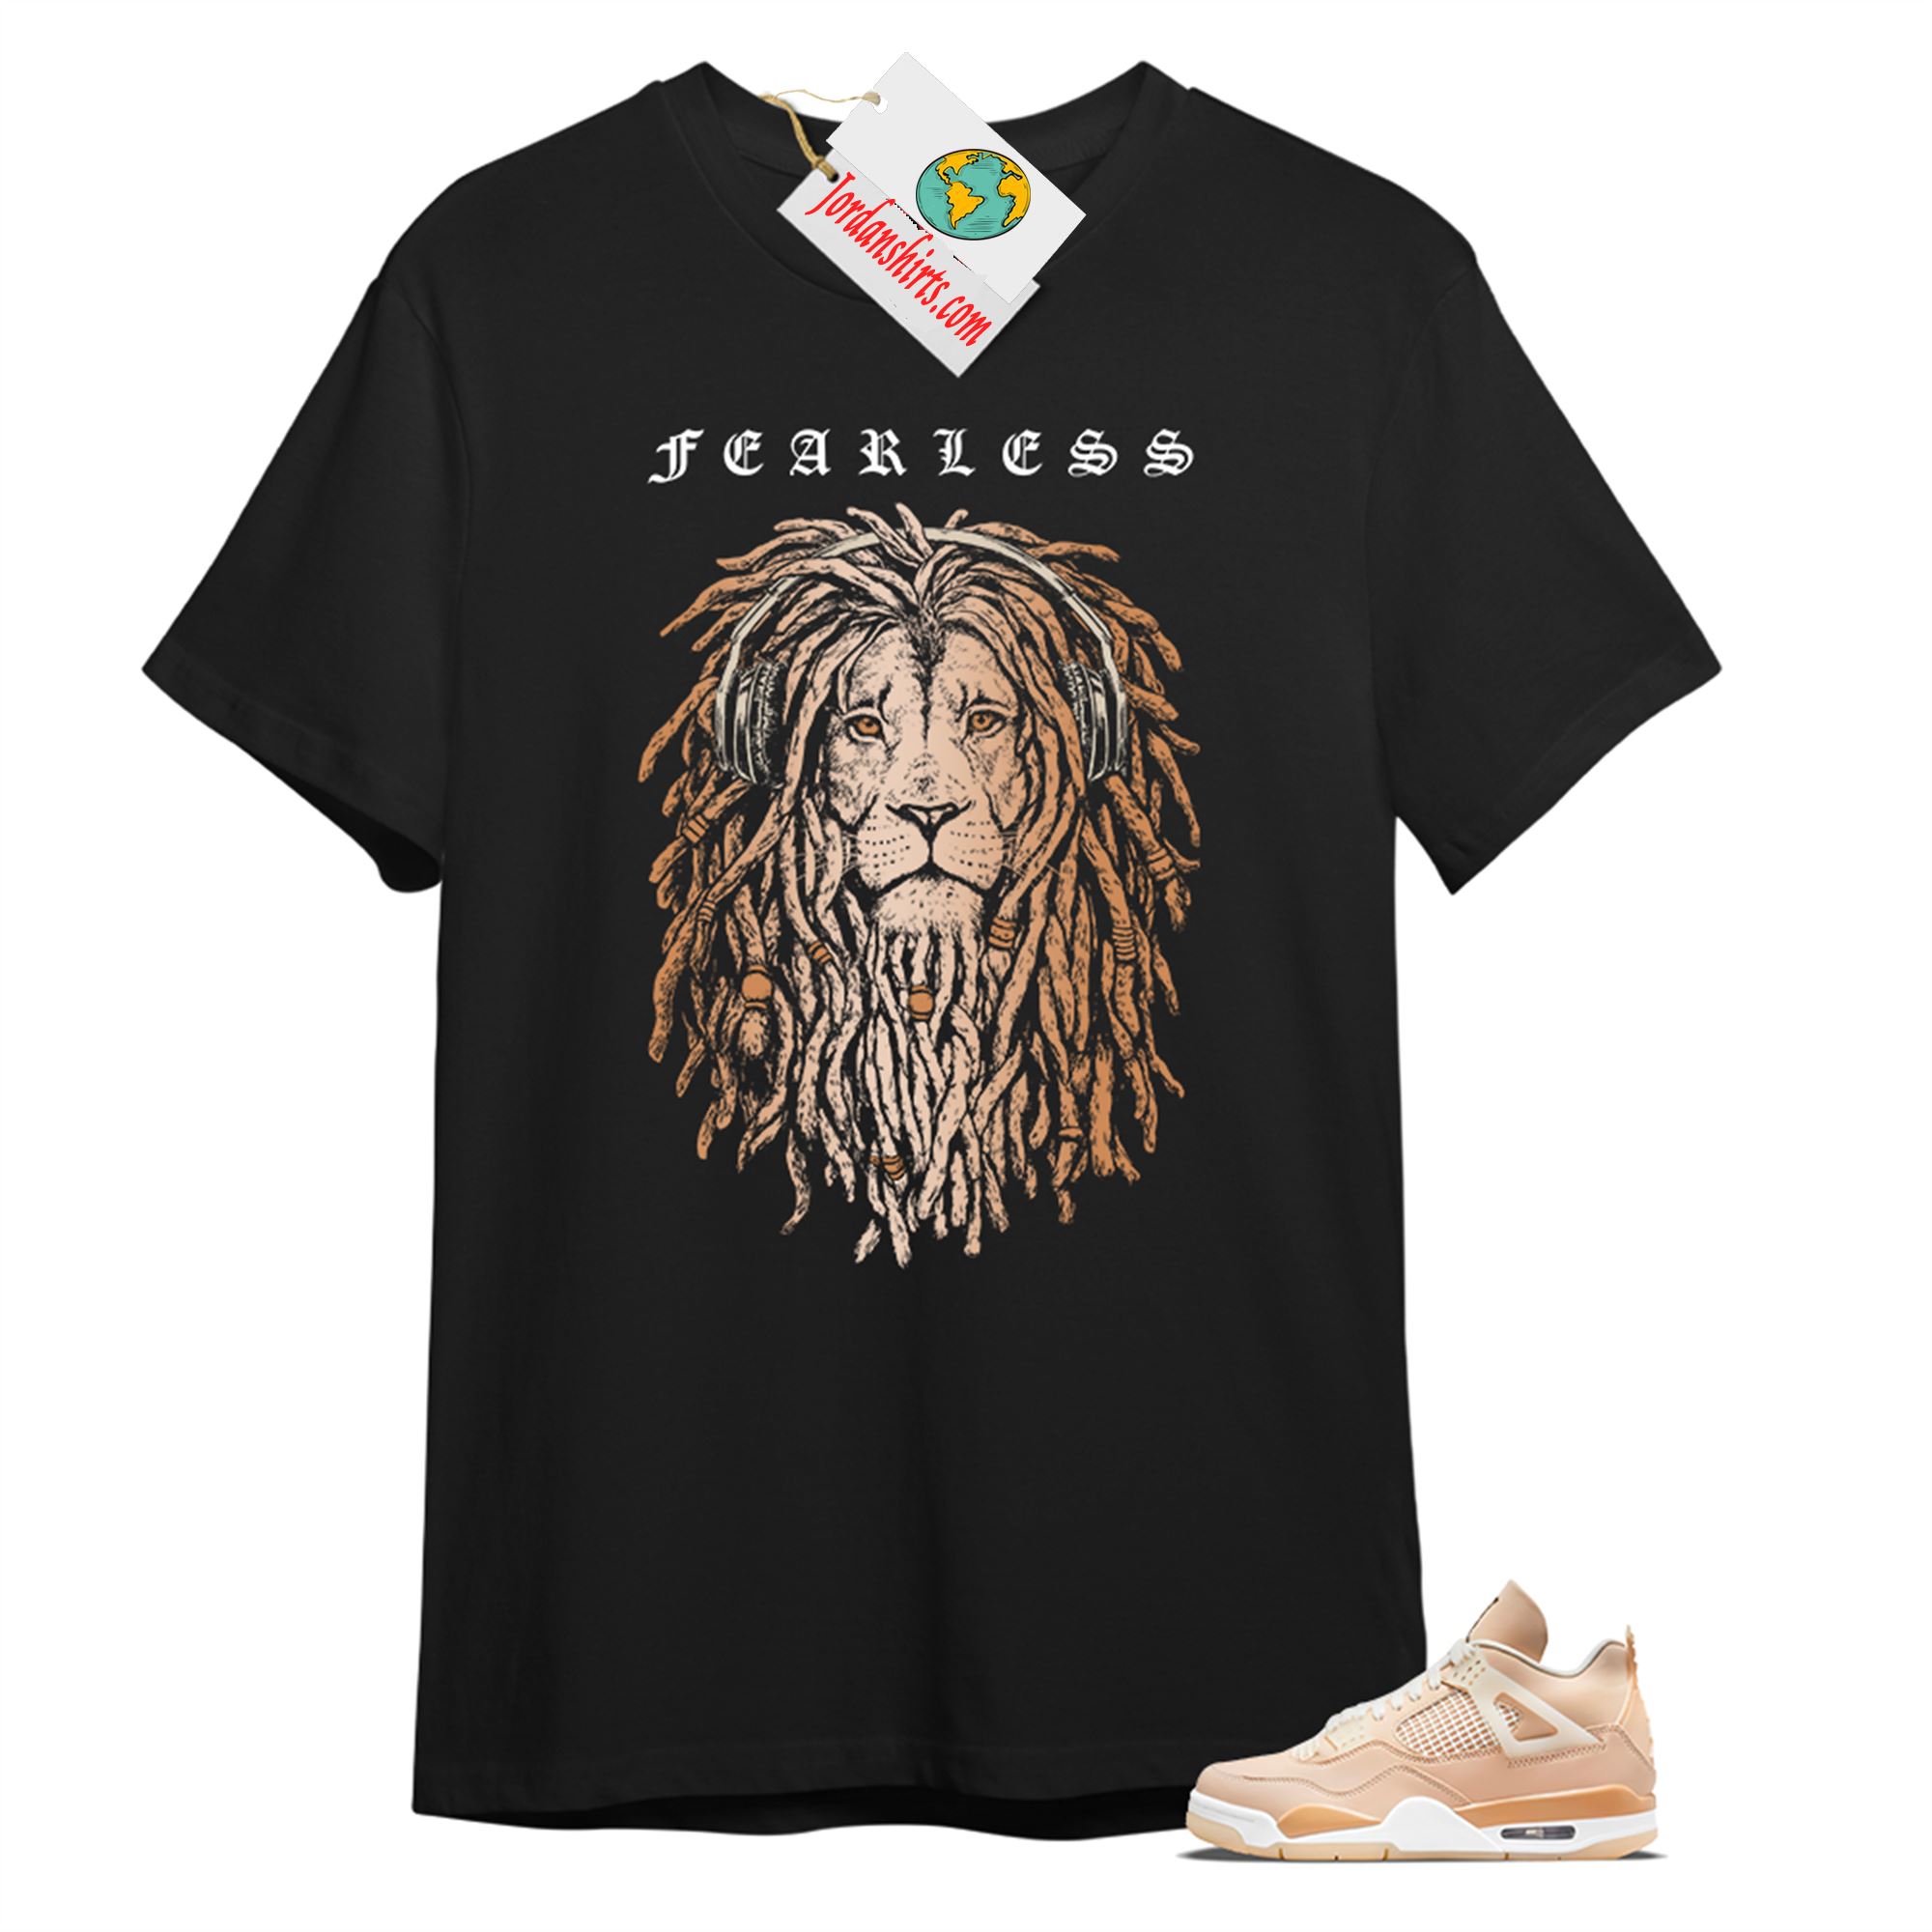 Jordan 4 Shirt, Fearless Lion Black T-shirt Air Jordan 4 Shimmer 4s Full Size Up To 5xl